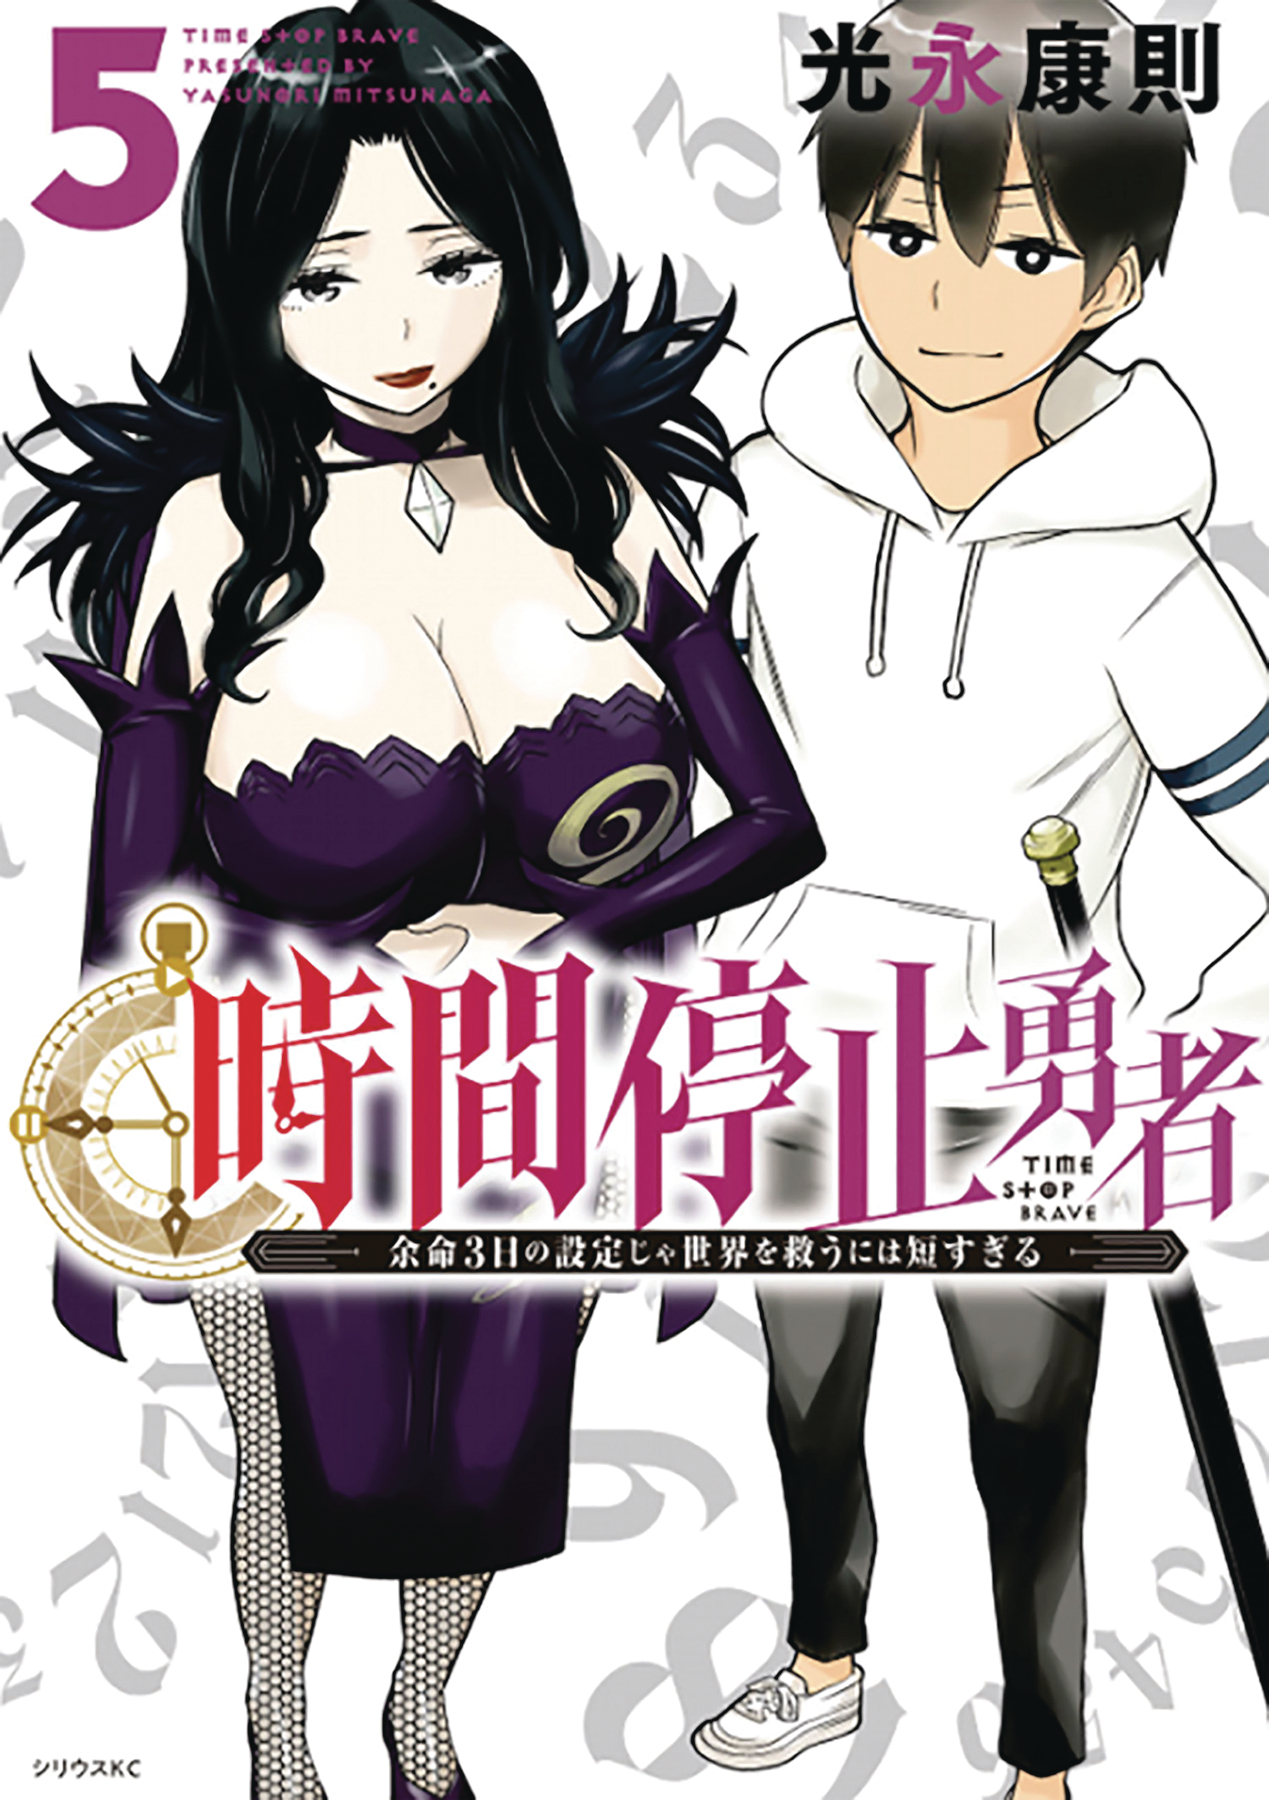 Time Stop Hero Manga Volume 5 (Mature)